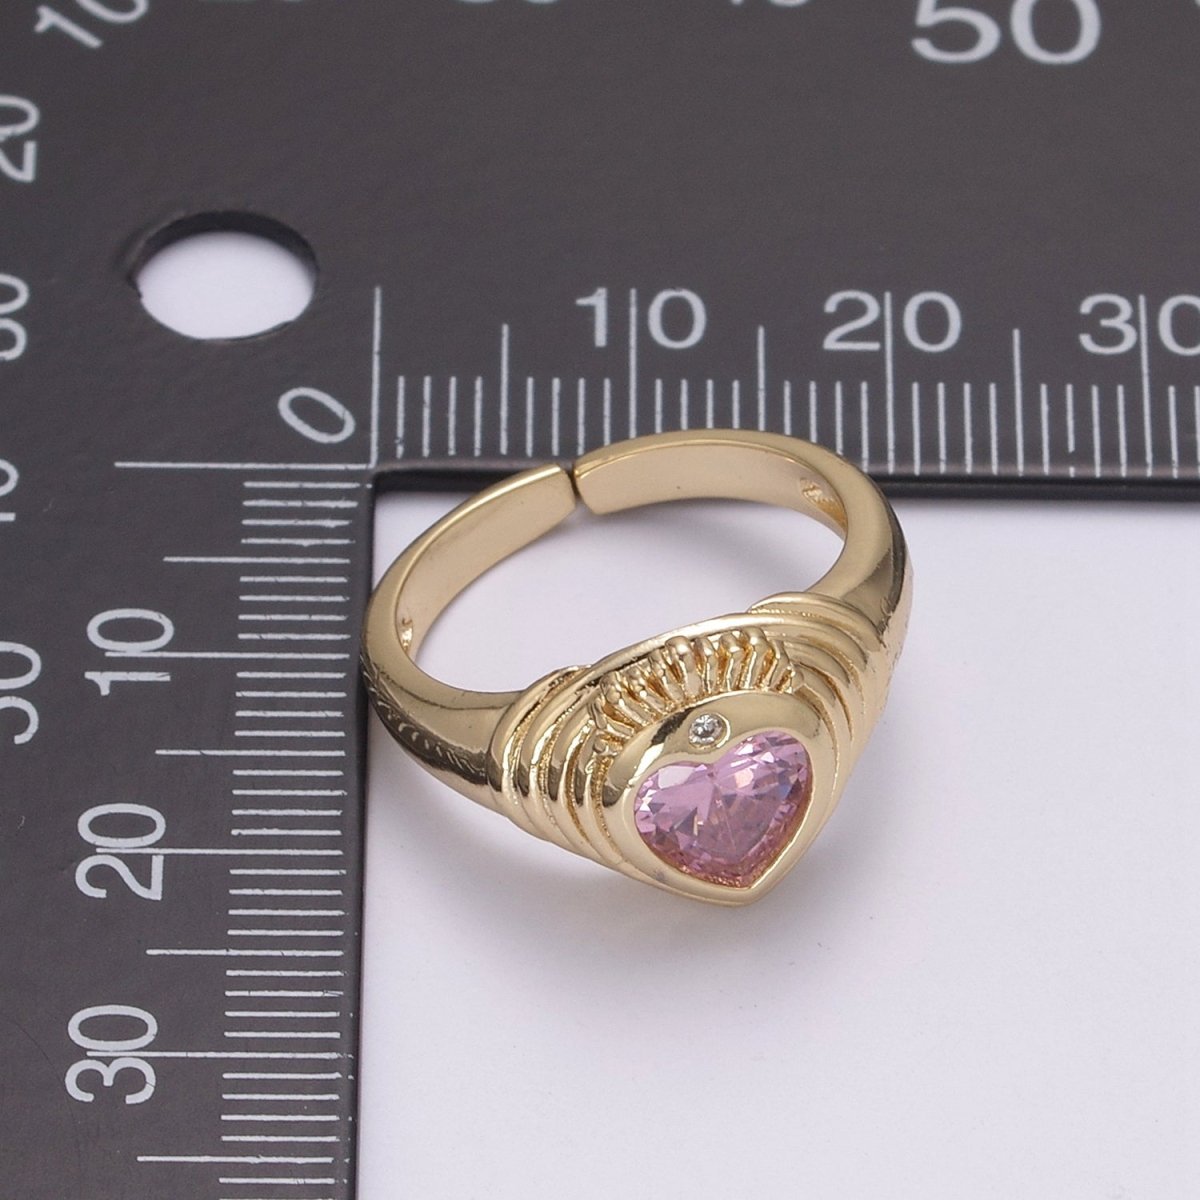 Heart Signet Ring • Gold Dome Ring • Heart Ring Gold • Heart Dome Ring • Bold Heart Ring • CZ Modern Signet Ring U-198 ~ U-200 - DLUXCA